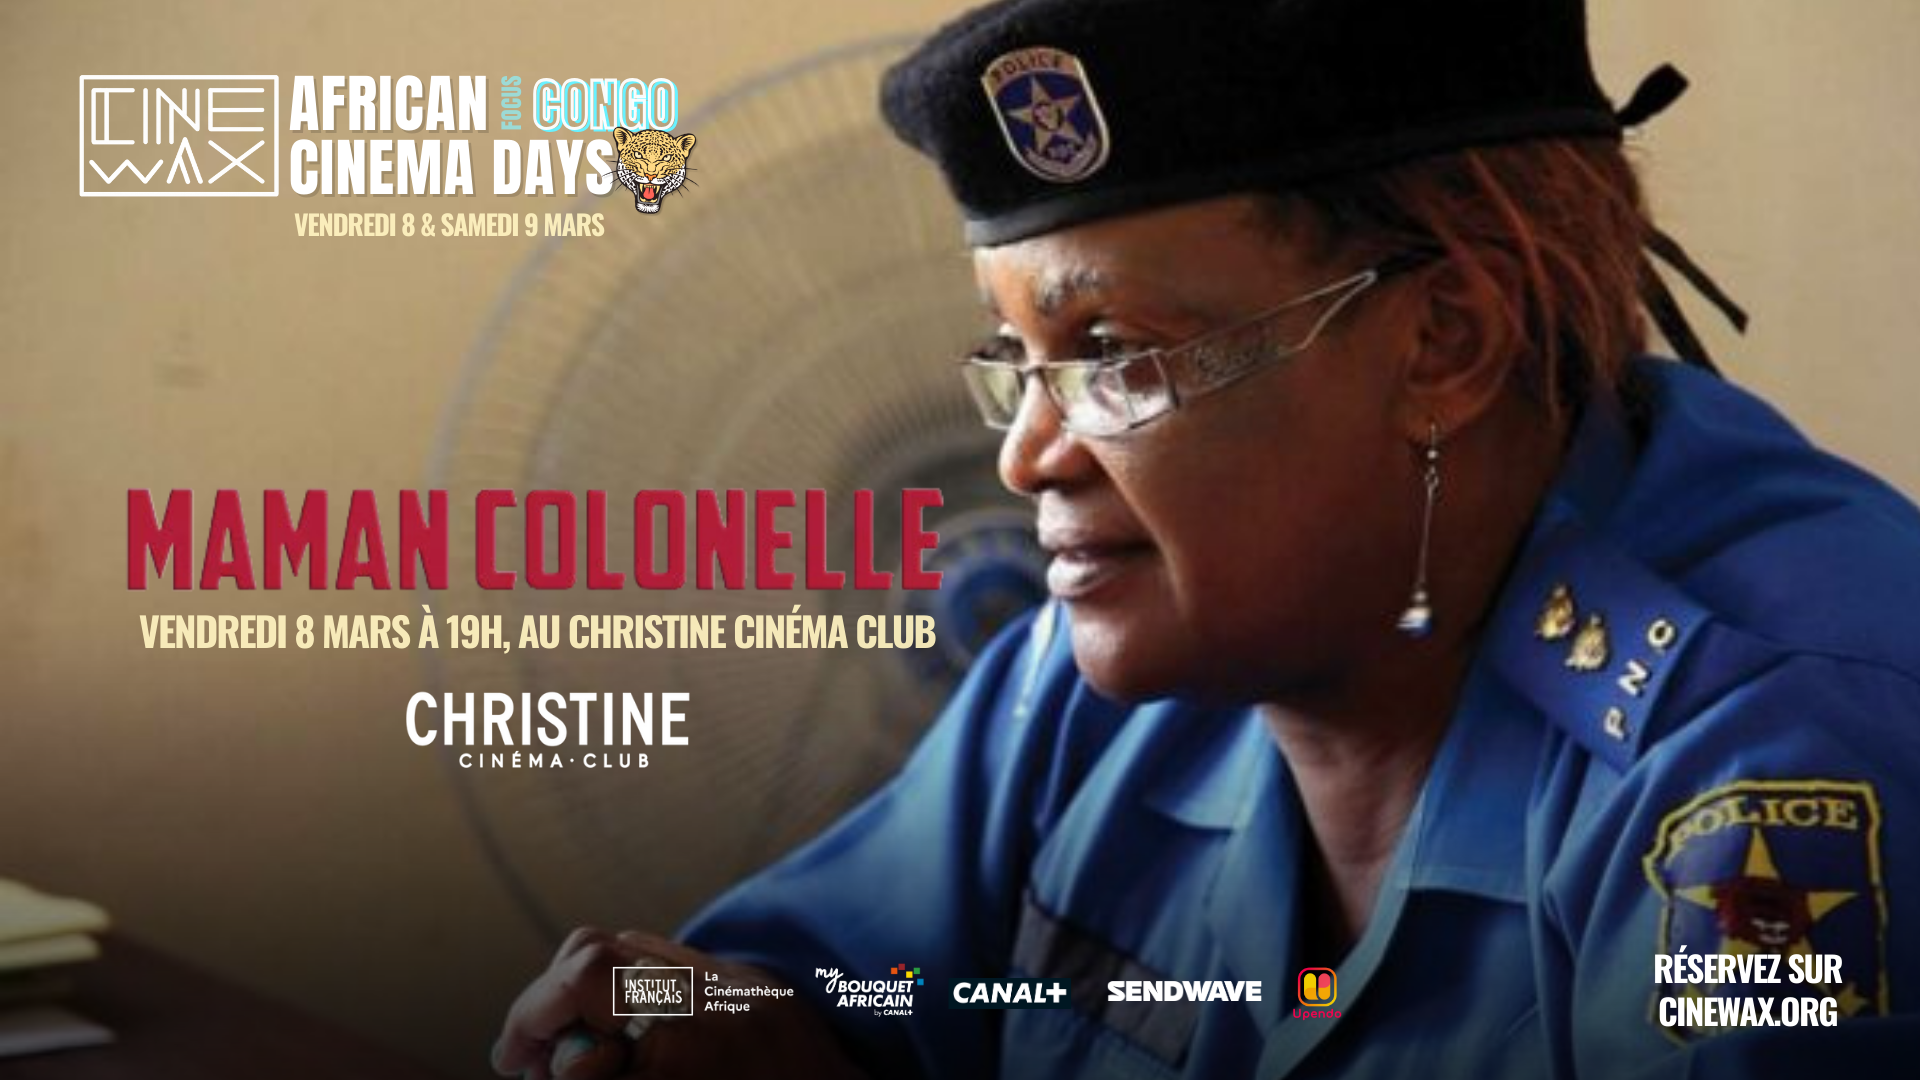 African cinema days cinewax congo cinema africain maman colonelle dieudo hamadi documentaire congolais